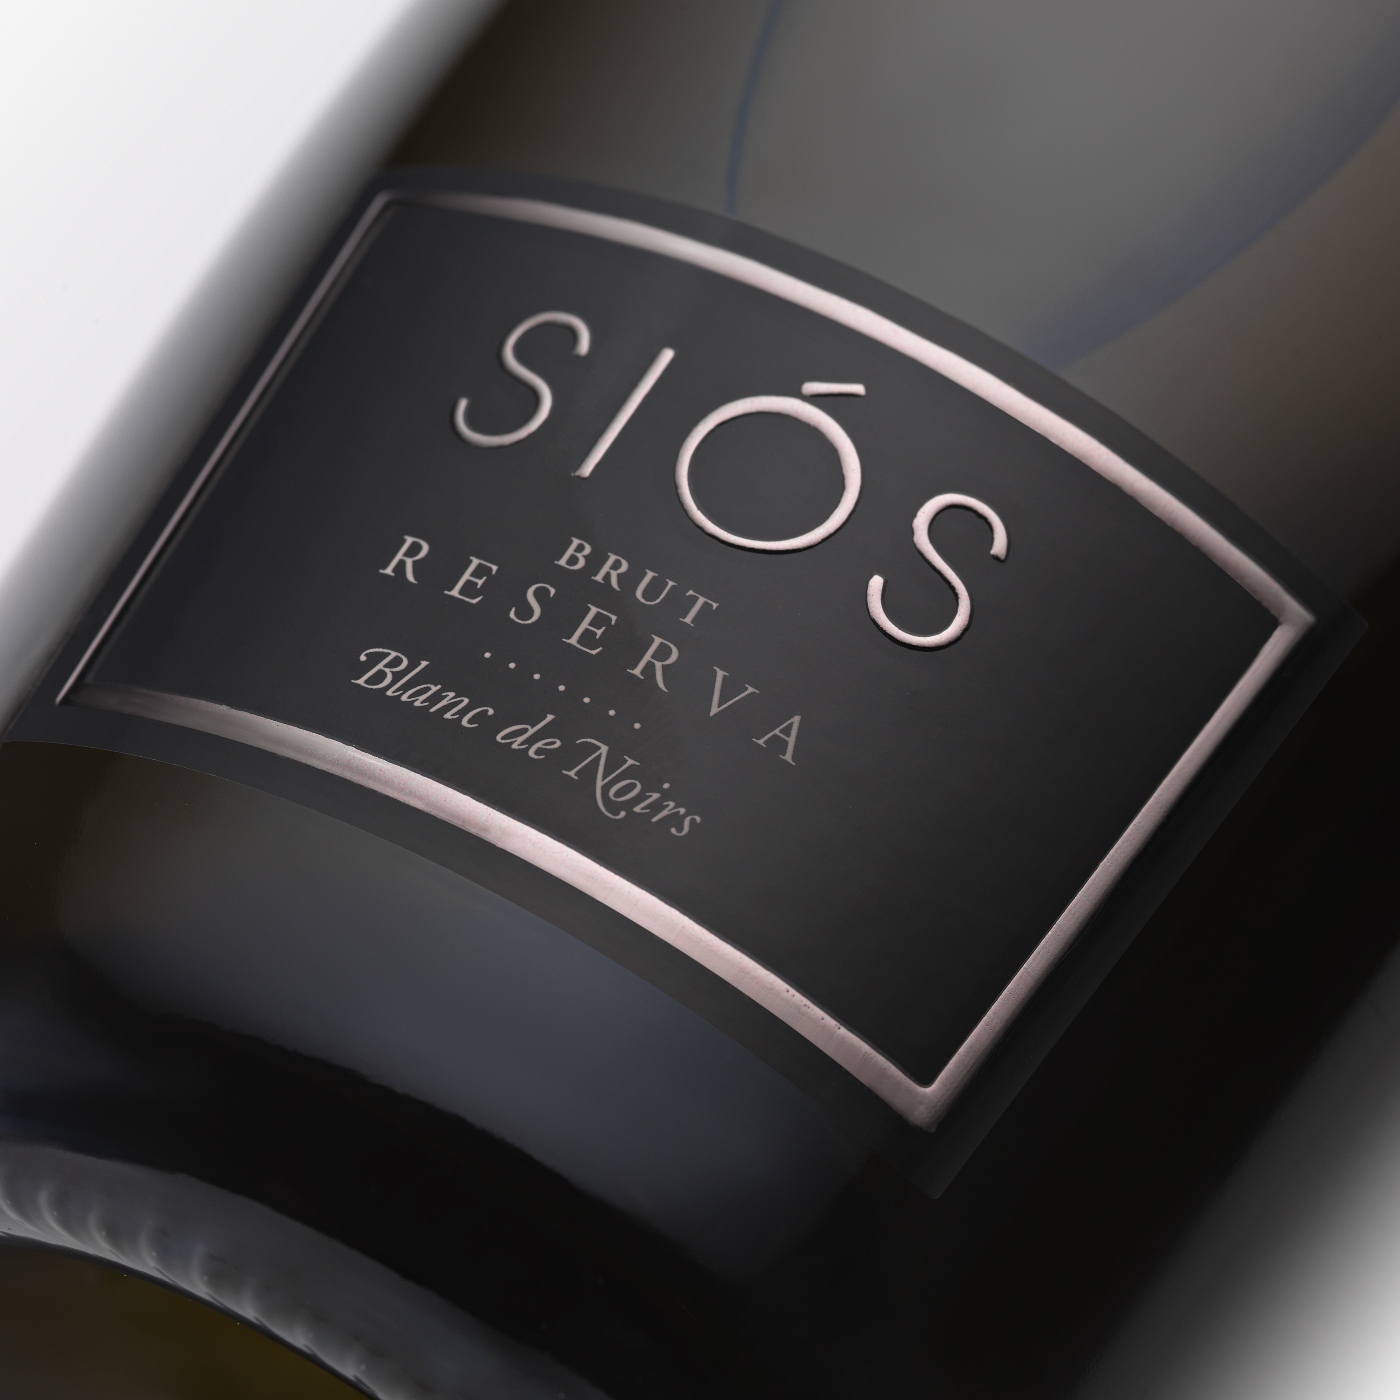 Sparkling wine Siós Brut Blanc de Noirs Image | Costers del Sió Winery